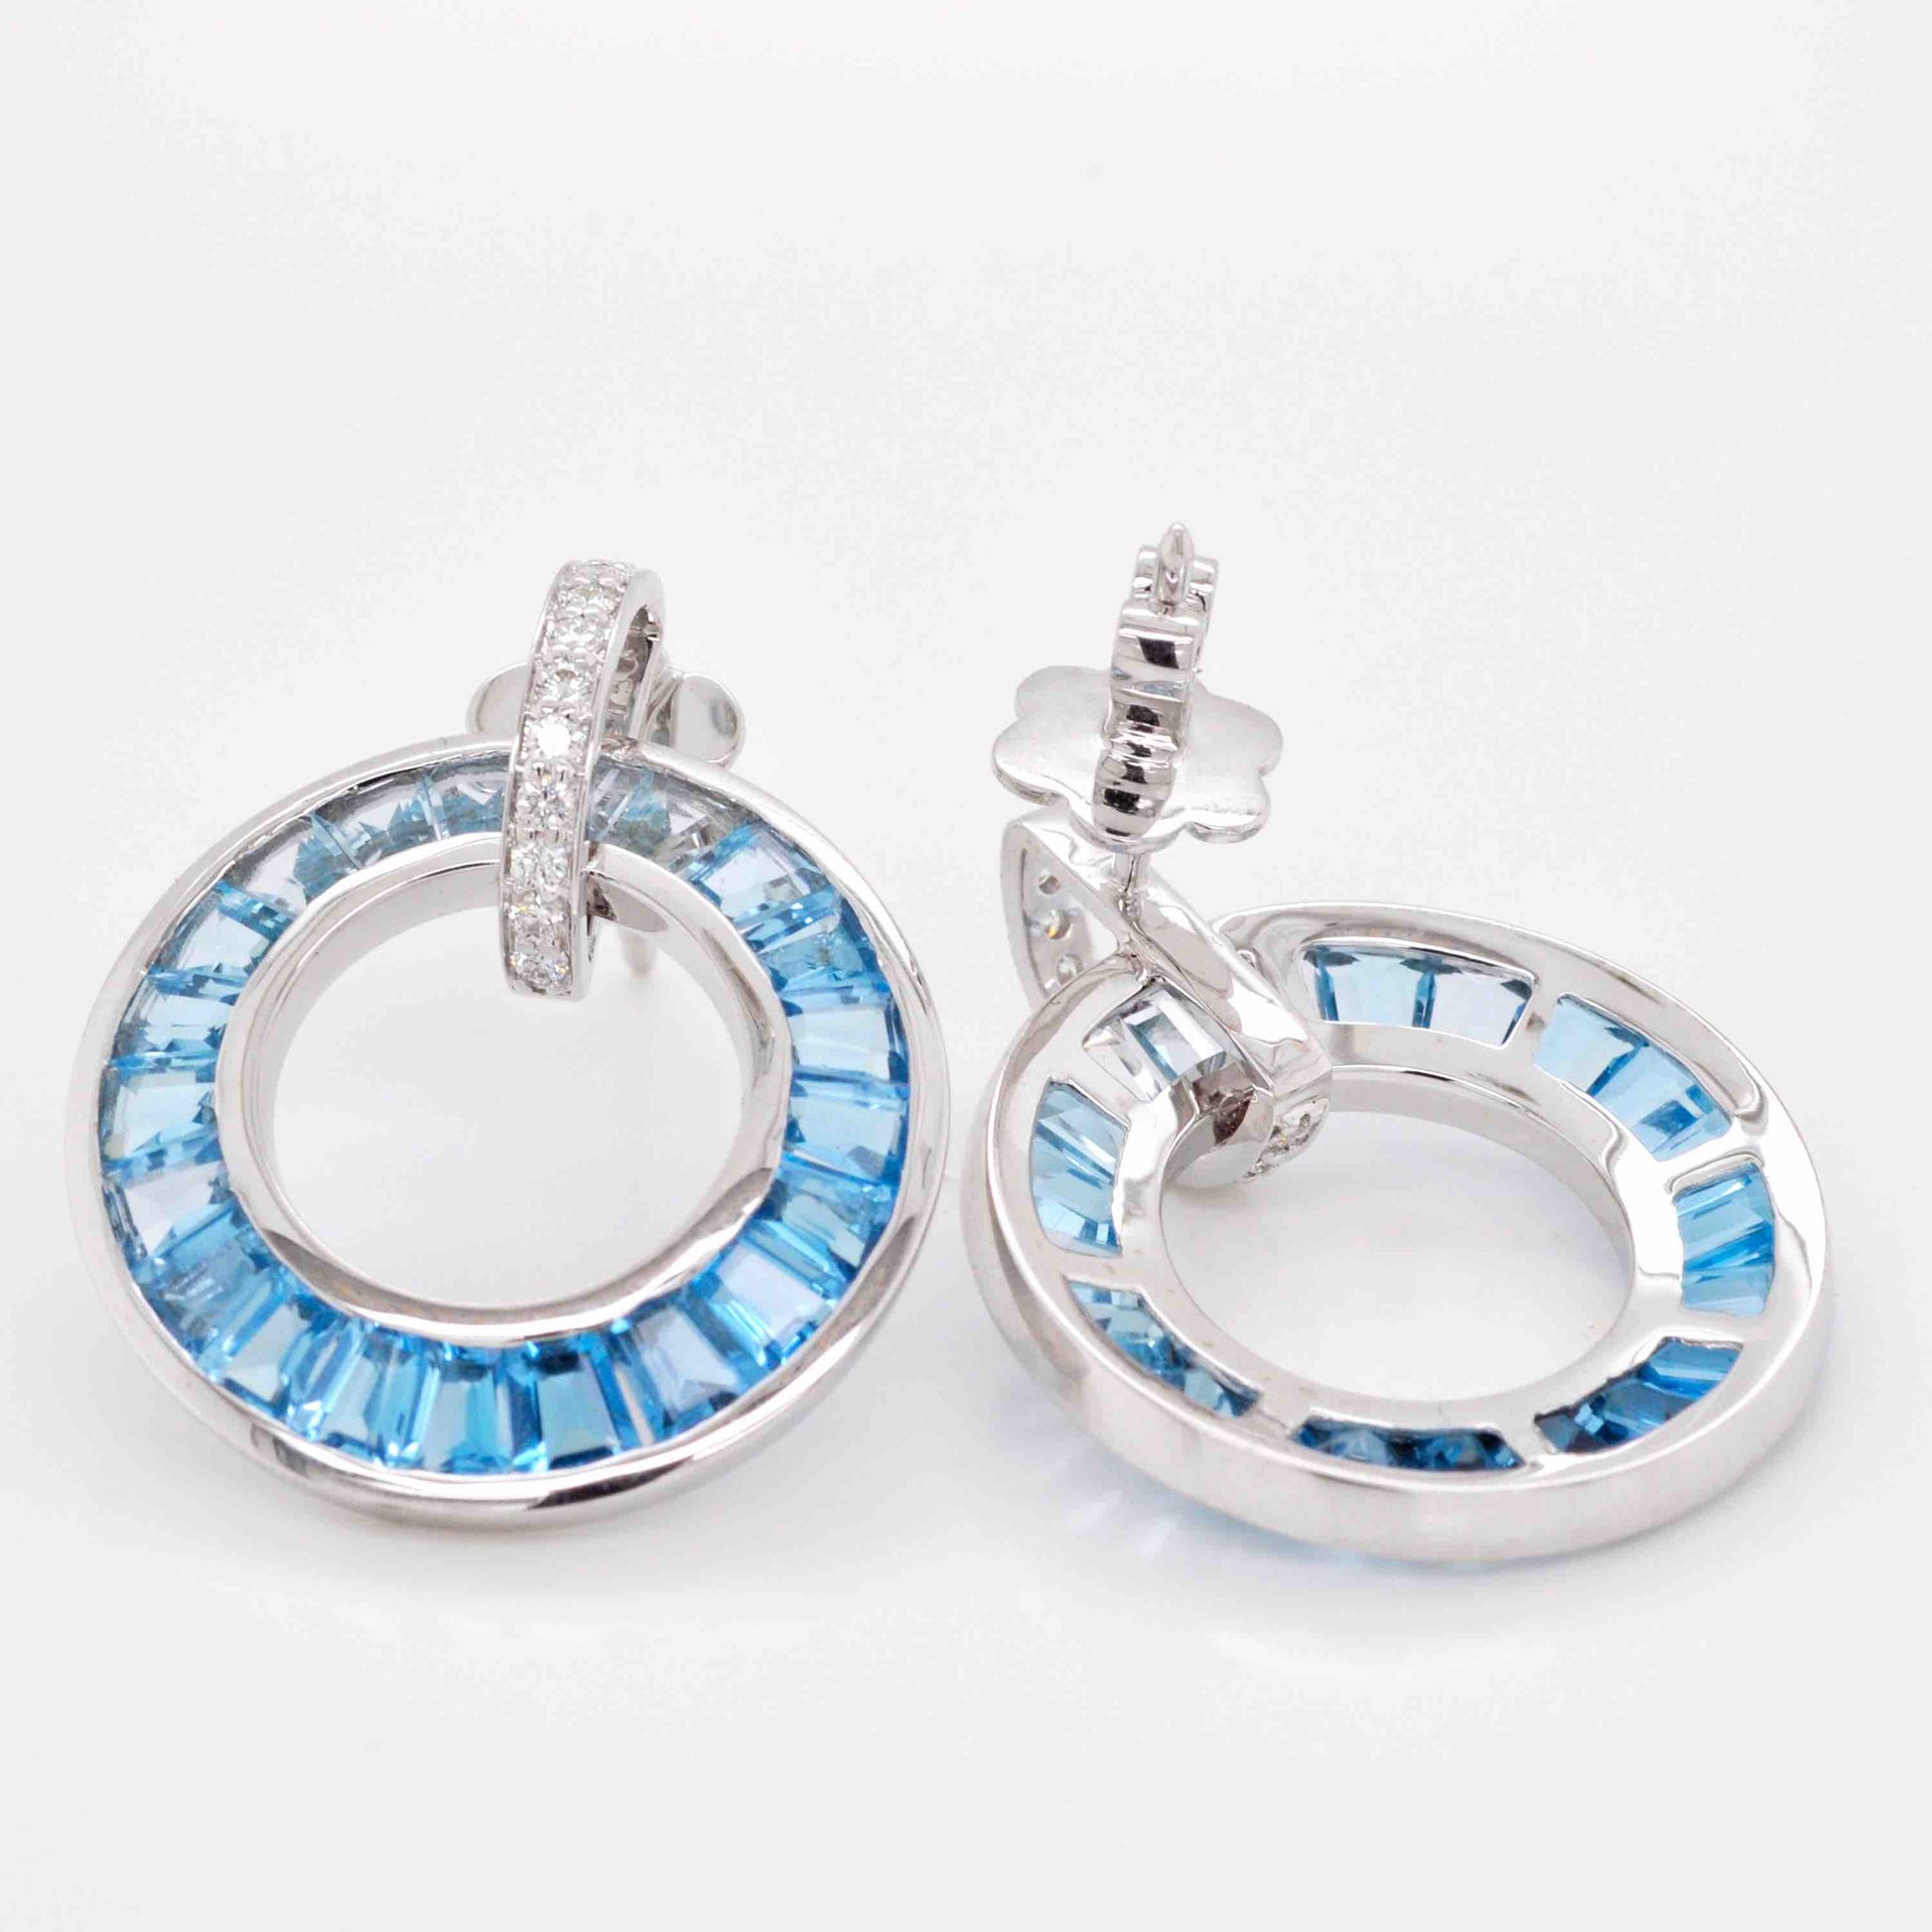 18K White Gold Tapered Baguette Blue Topaz Diamond Circle Earrings - Vaibhav Dhadda Jewelry